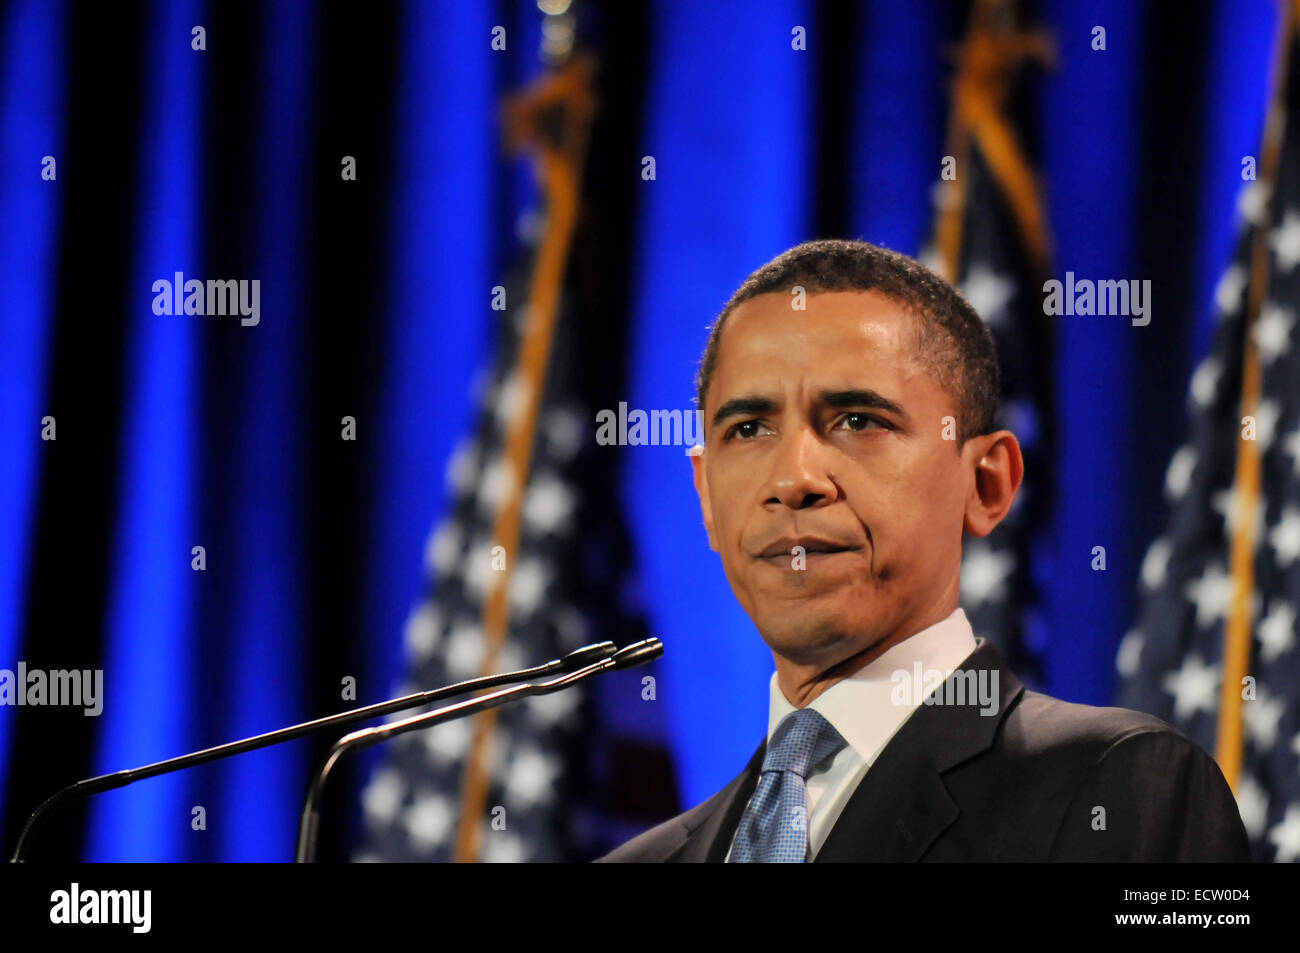 Barack Obama, US-Senator, Rede über Rasse und Politik in Philadelphia 18. März 2008. Stockfoto